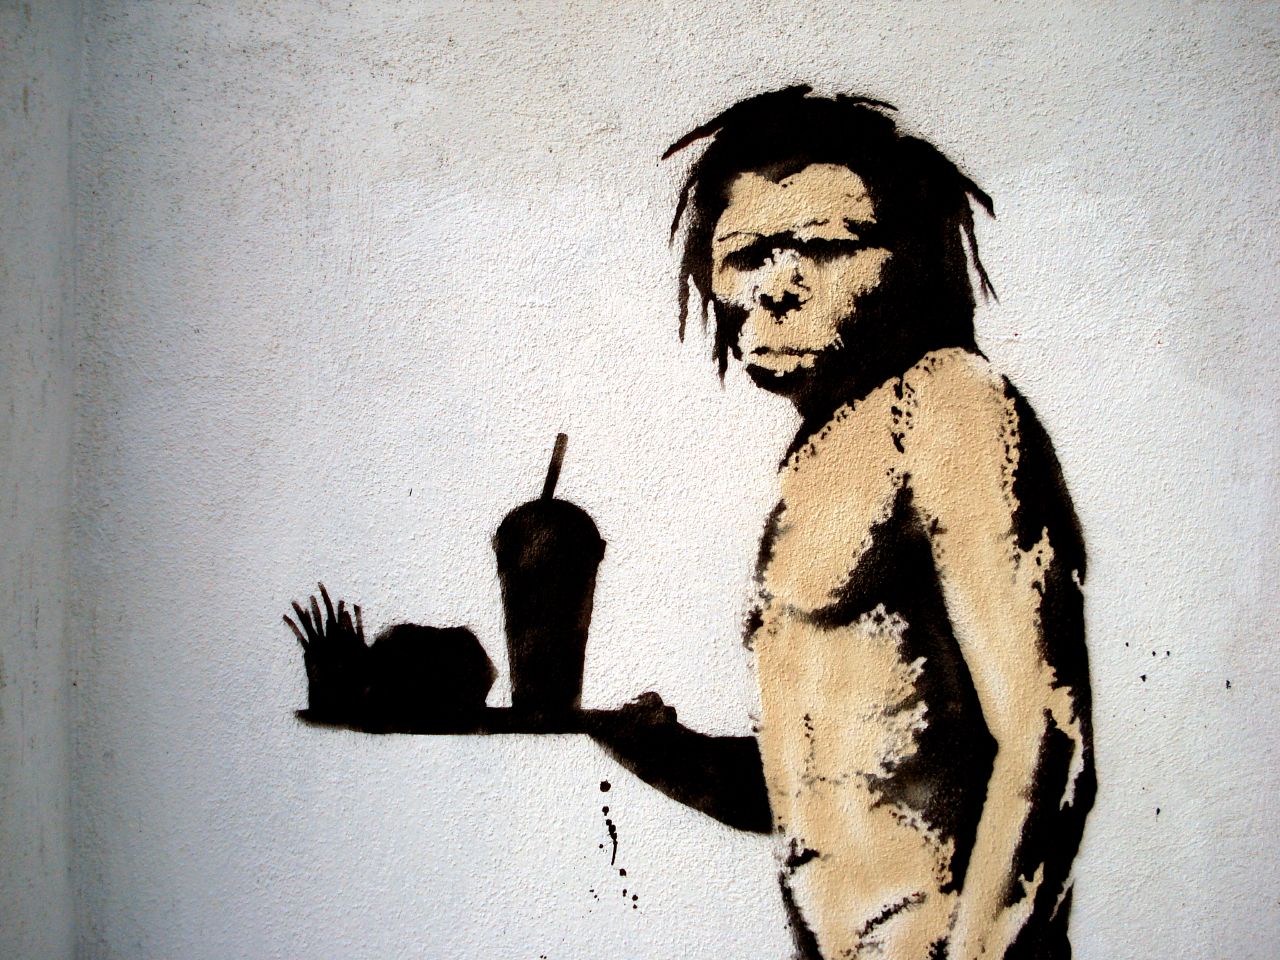 caveman holding fast food silhouette banksy street art 